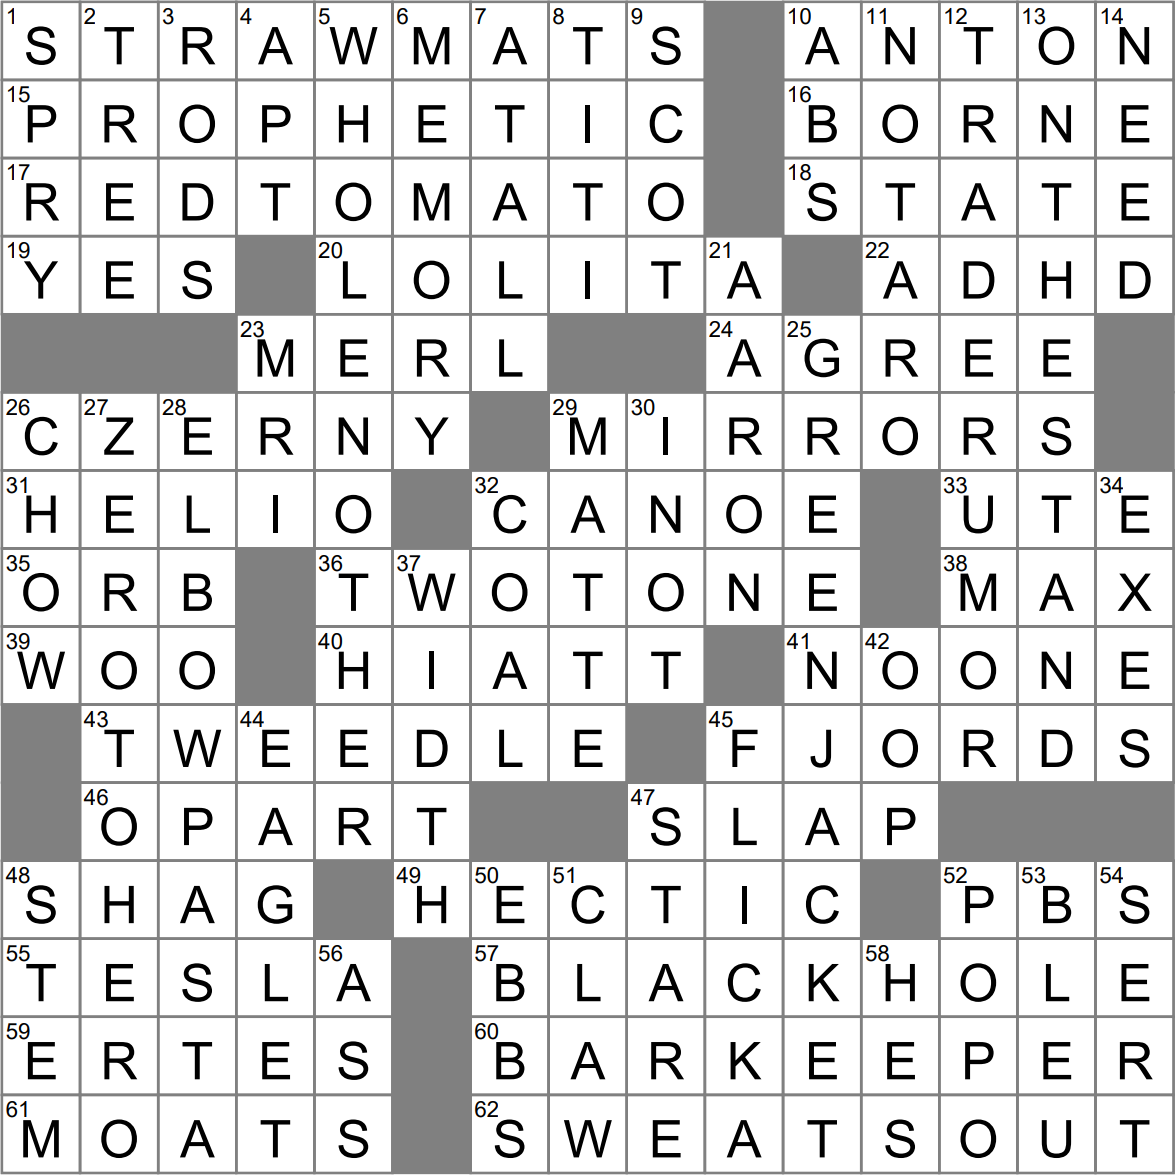 LA Times Crossword 13 May 23 Saturday LAXCrossword com